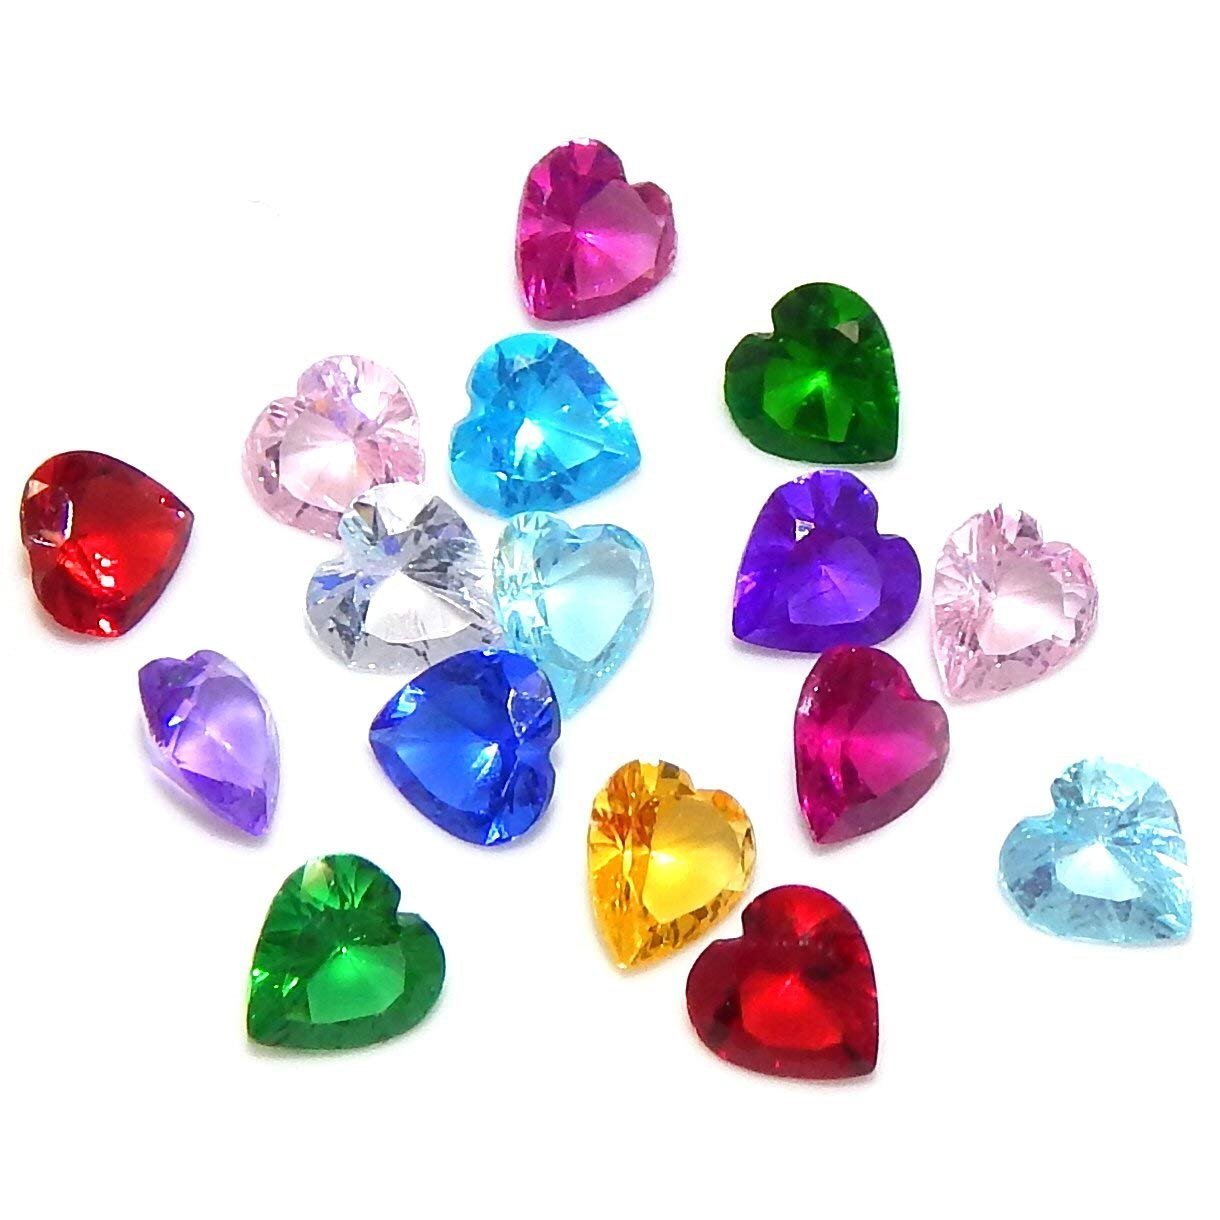 Memory Locket Charm - Birthstone Crystal Heart (February - Amethyst) - The Little Jewellery Company